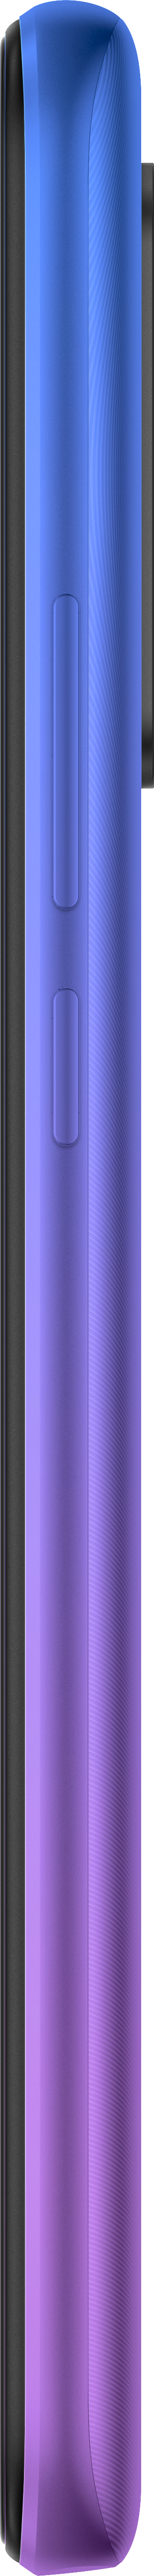 Dual Sunset SIM XIAOMI REDMI 9 Purple GB 64